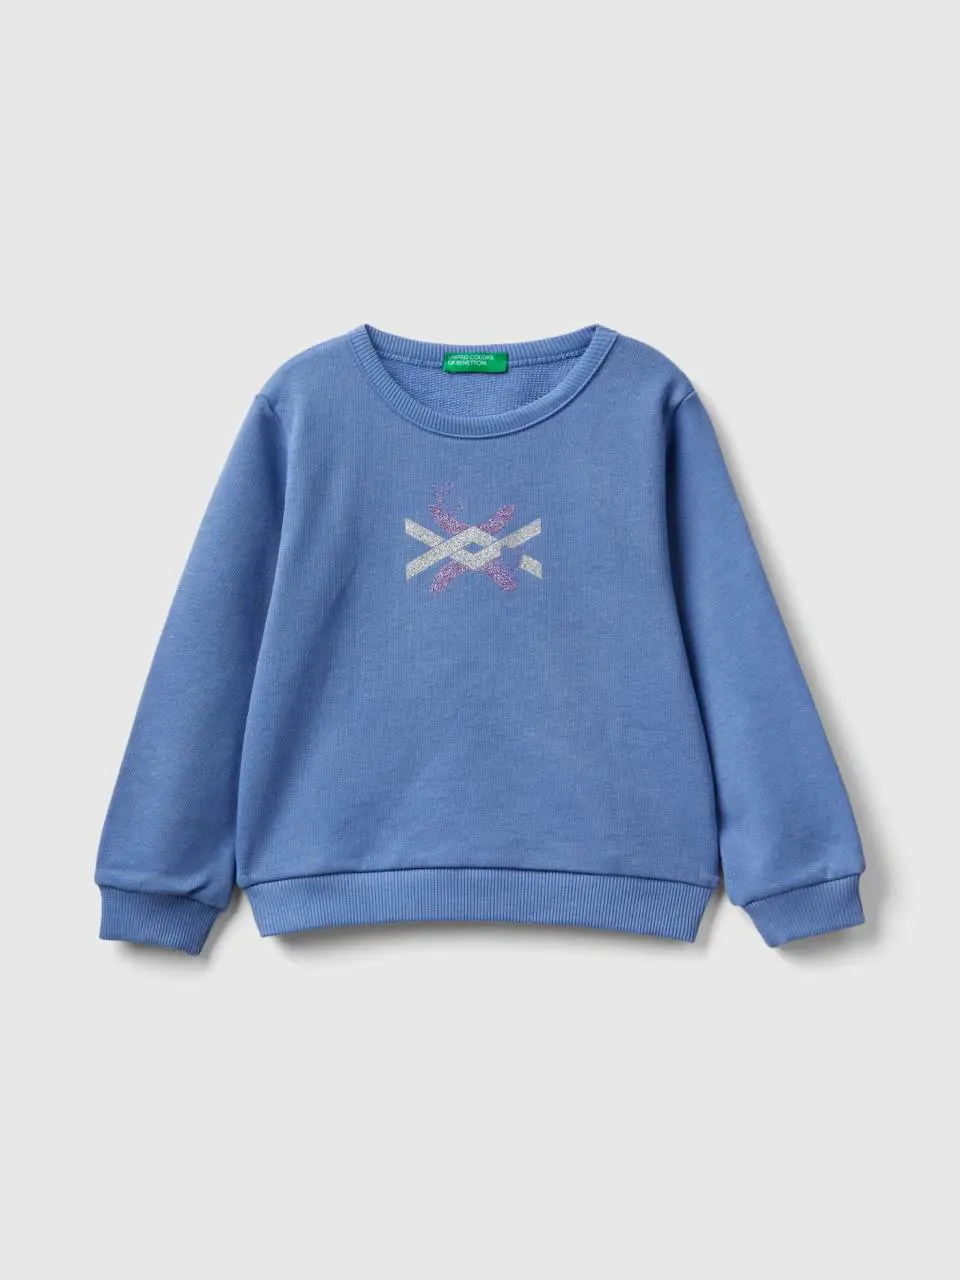 Benetton sky blue sweatshirt in organic cotton with glittery print. 1